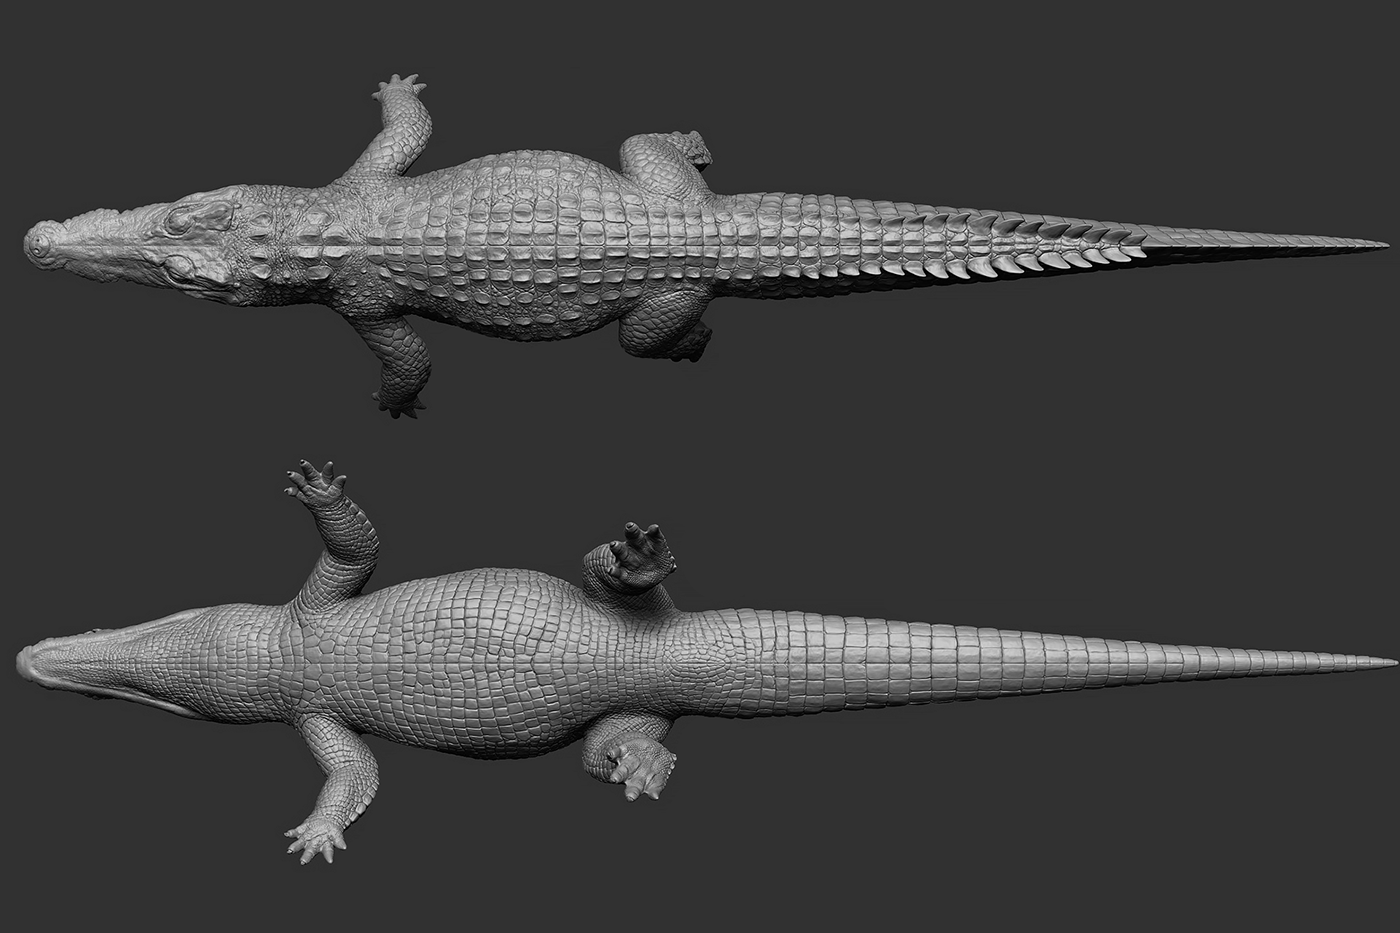 alligator croc croc 3d crocodile crocodile 3d model crocodile sculpt siamese siamese crocodile Zbrush